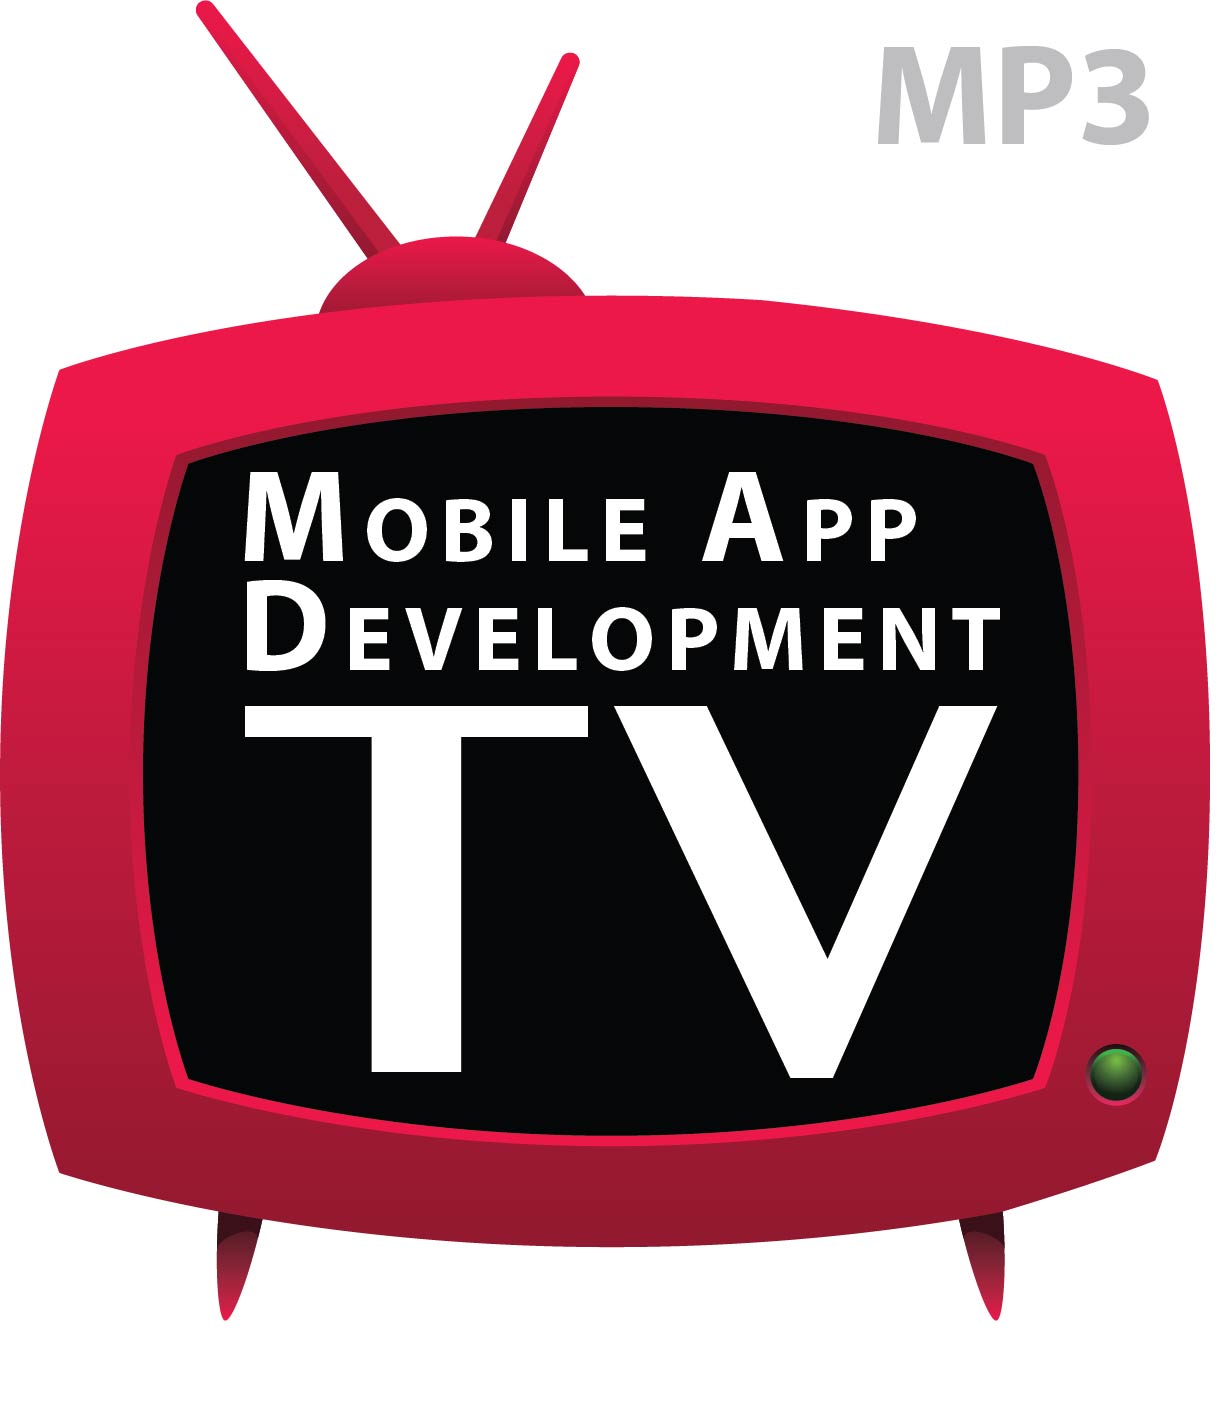 Mobile App Development TV (Video – MP3)